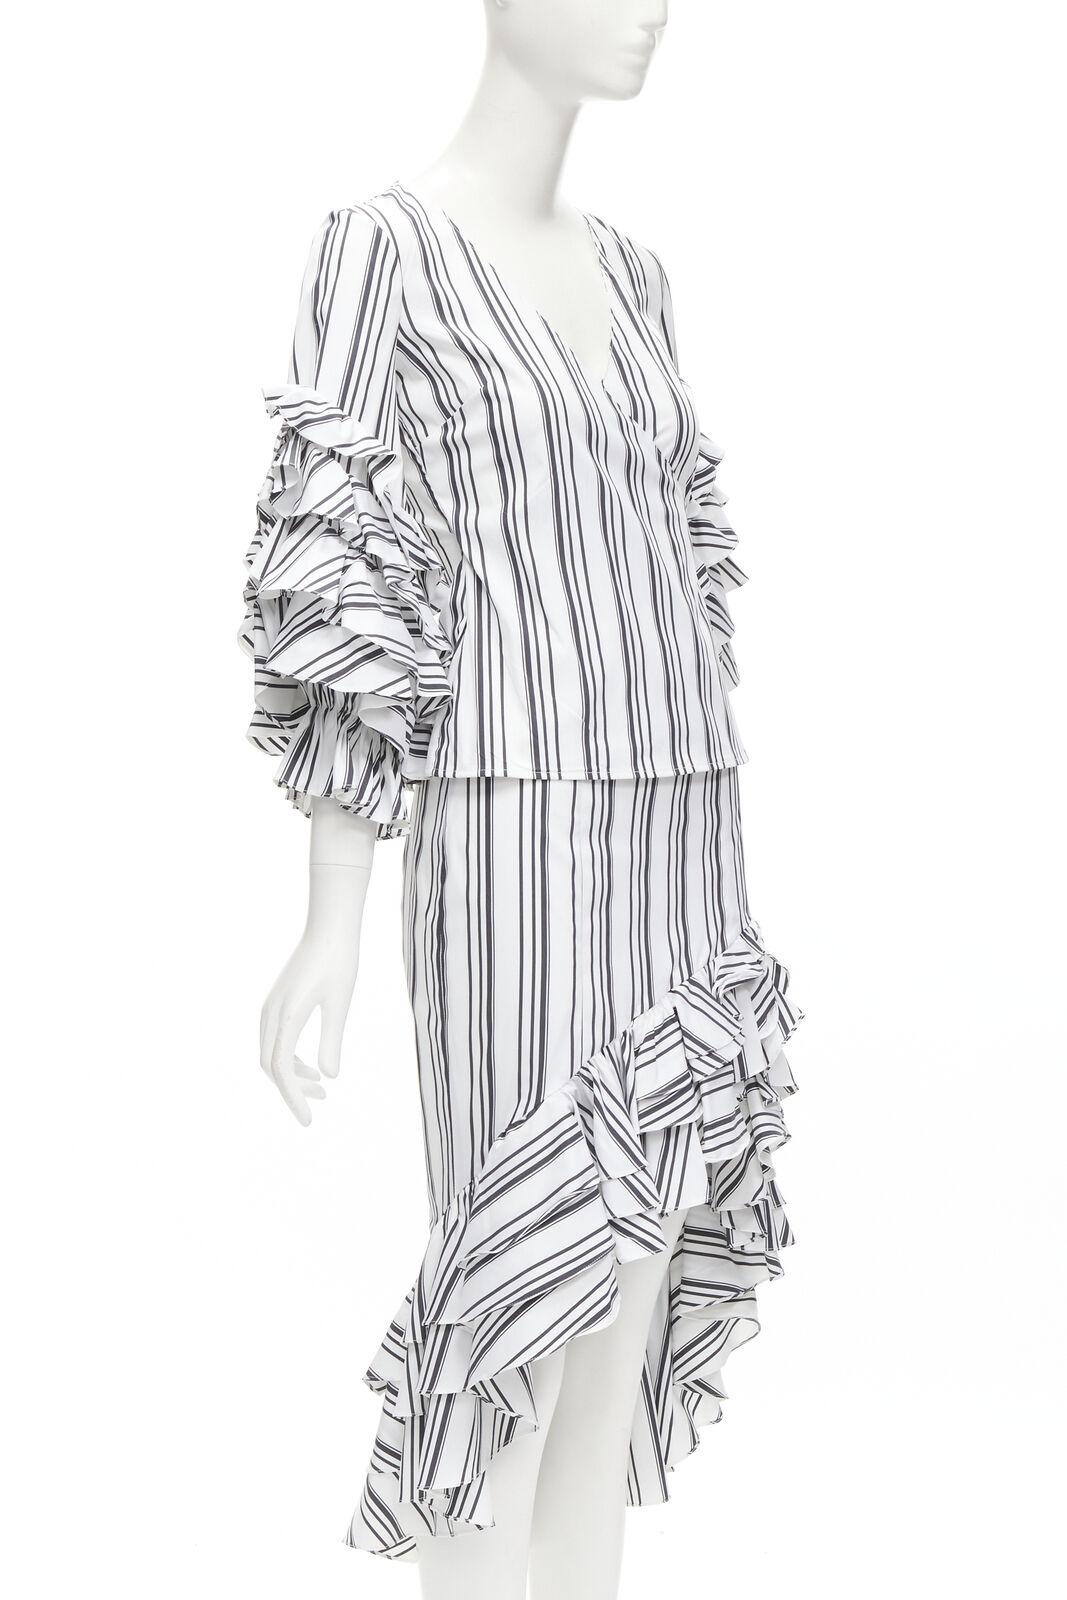 Gray CAROLINE CONSTAS black white ruffled stripes wrap top high low skirt set XS For Sale